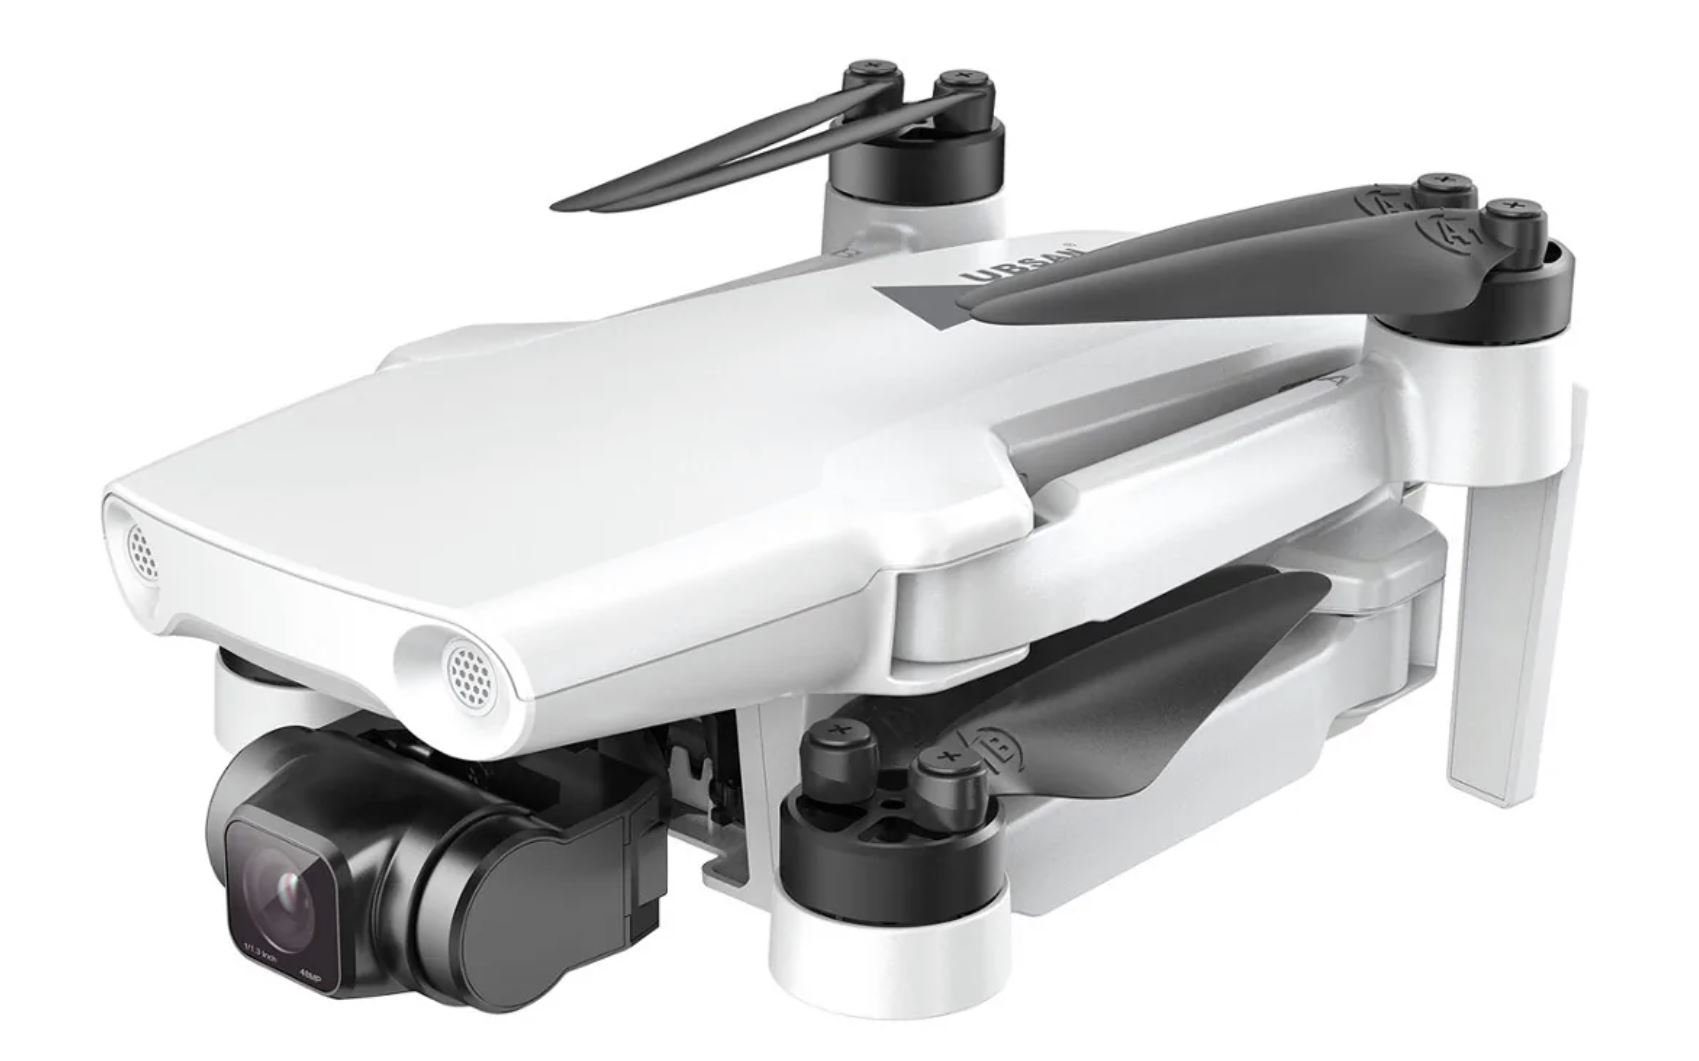 Original Brotos® Drohne Packung, DE, Drohne Hubsan mini Se Modelljahr Pro 2023